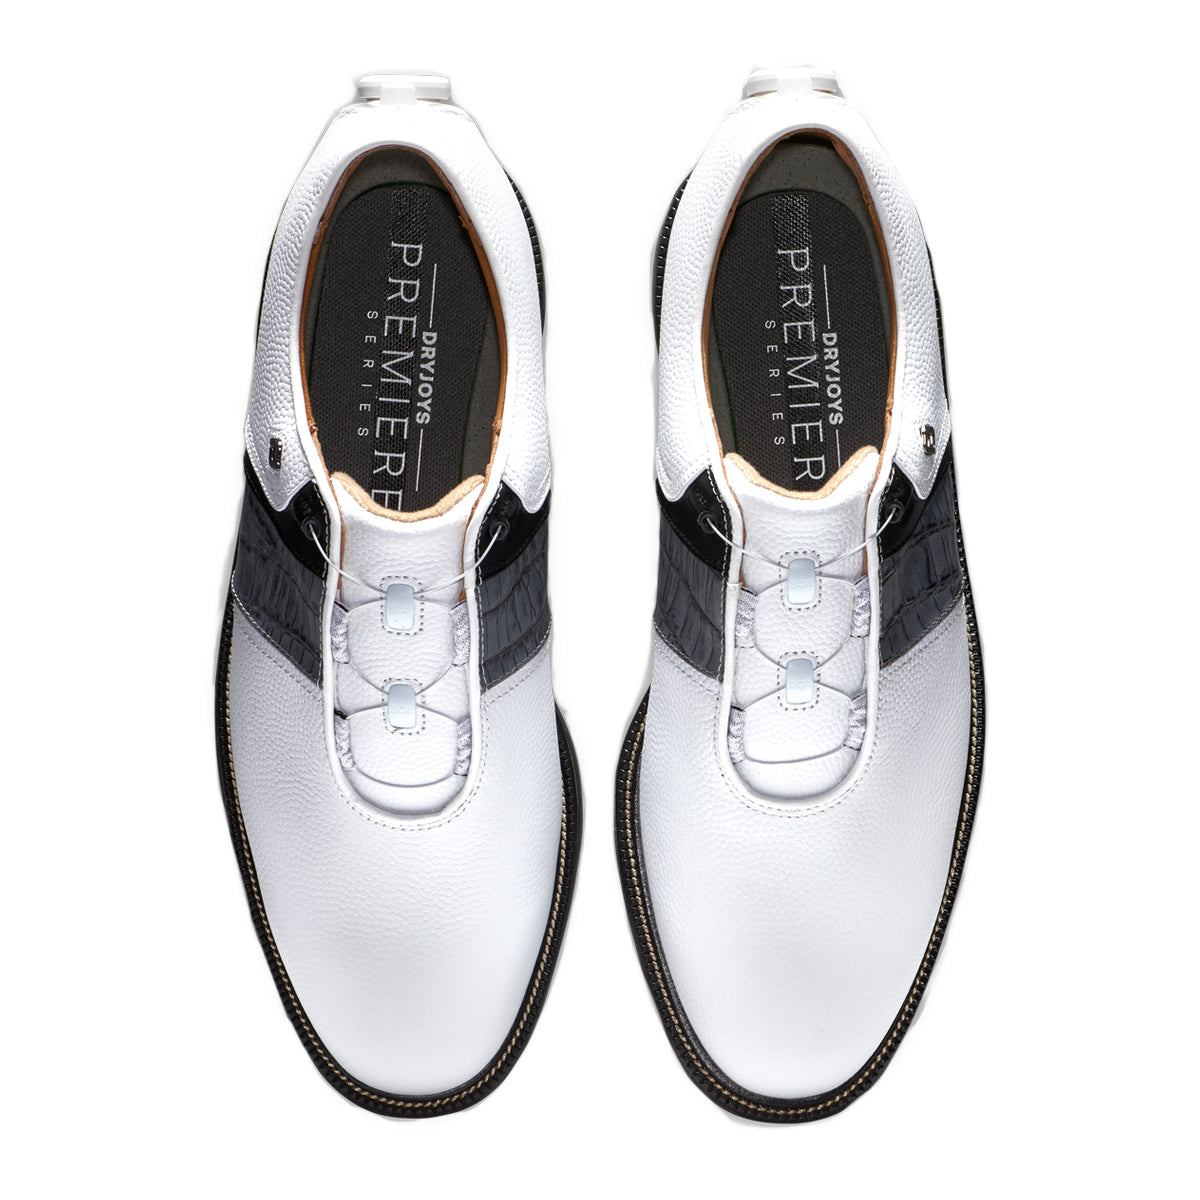 FootJoy Premiere Packard BOA Spikeless Golf Shoes 2021